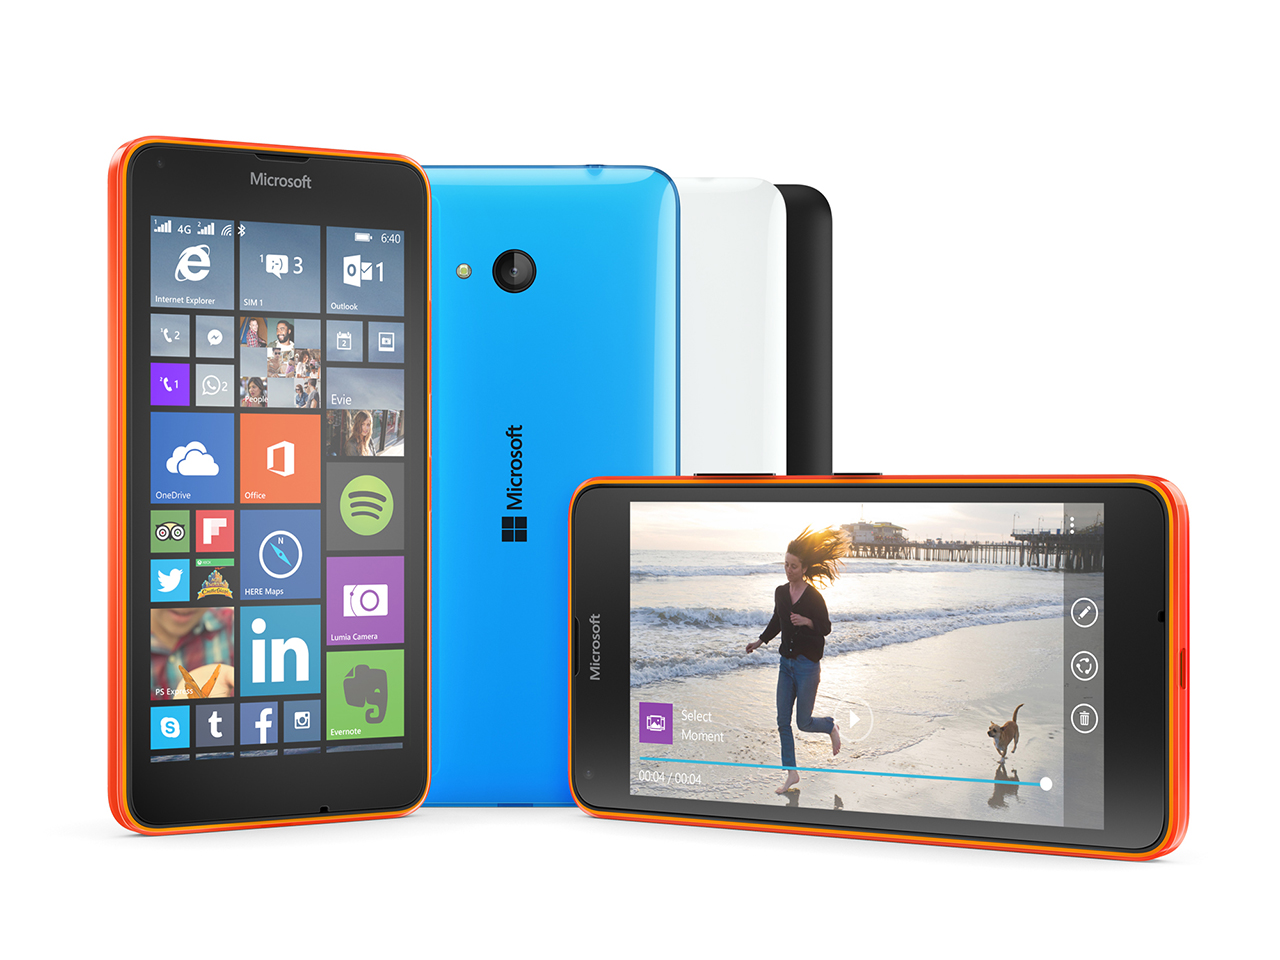 Microsoft Lumia 640 pictures